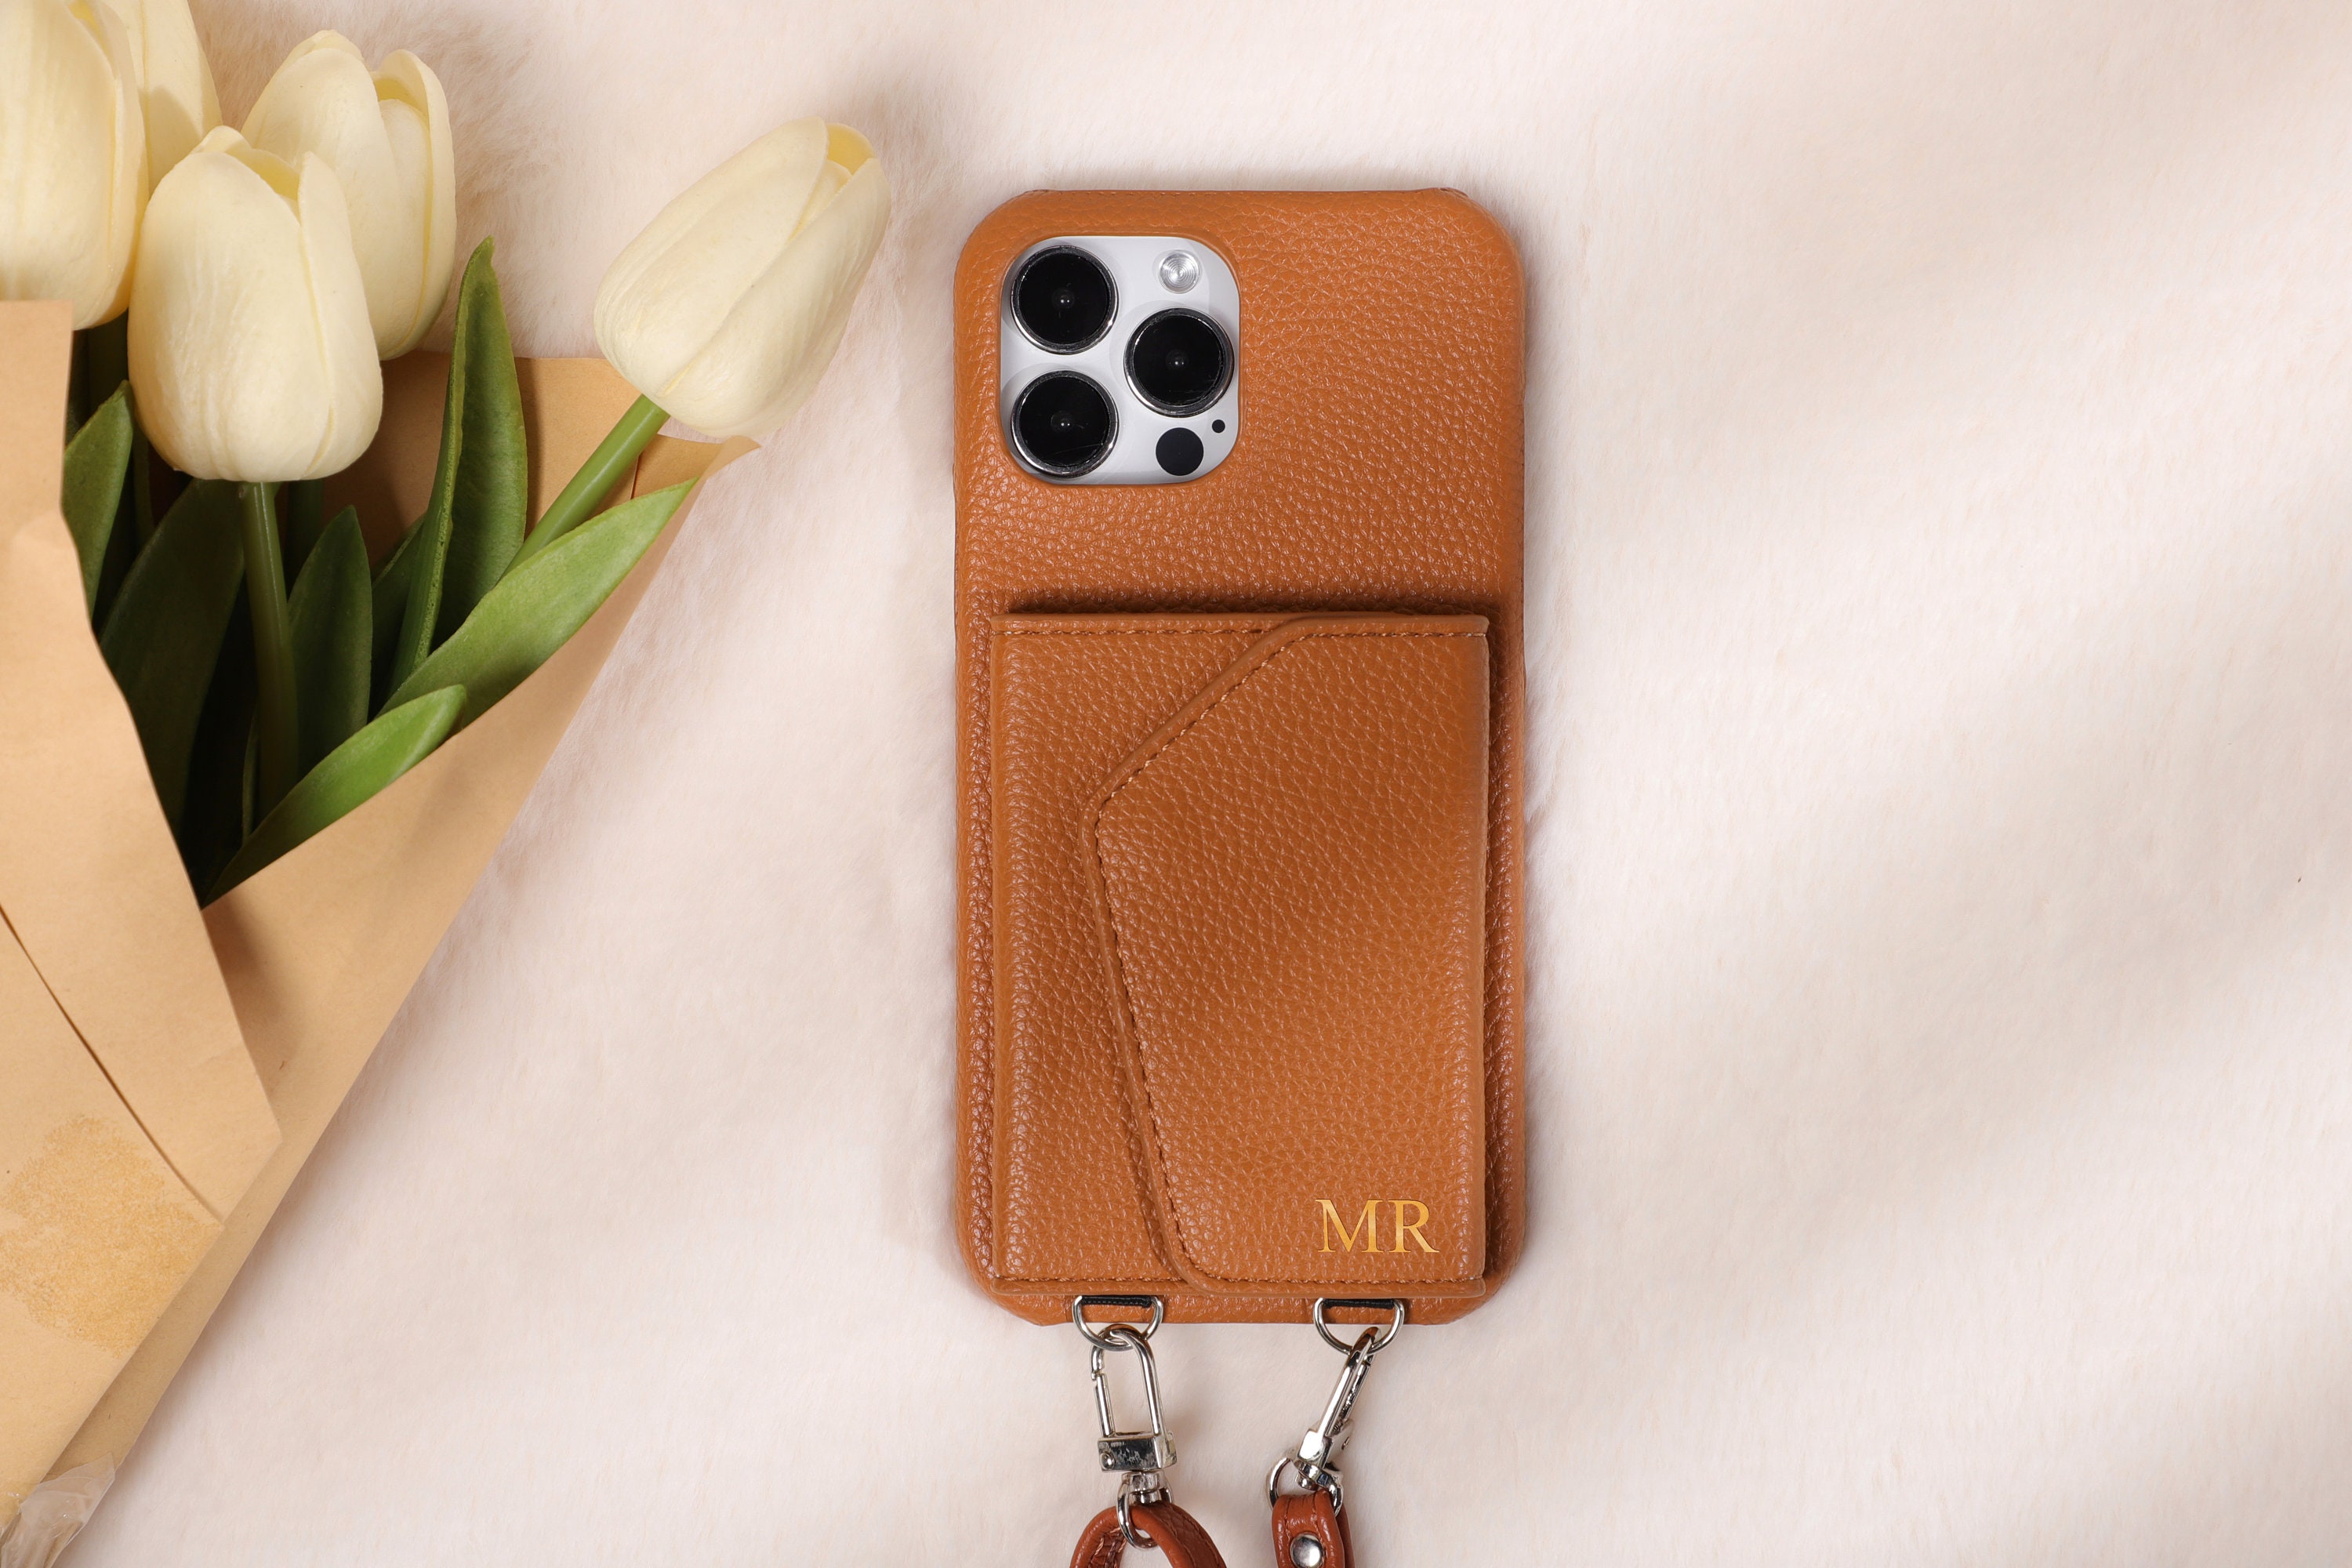 iPhone XR Leather Flip Case Cover,iPhone XR Zipper Wallet Case for Women  and Men, Dteck [14 Card Holder][Zipper][Magnetic Detachable] Wallet Folio